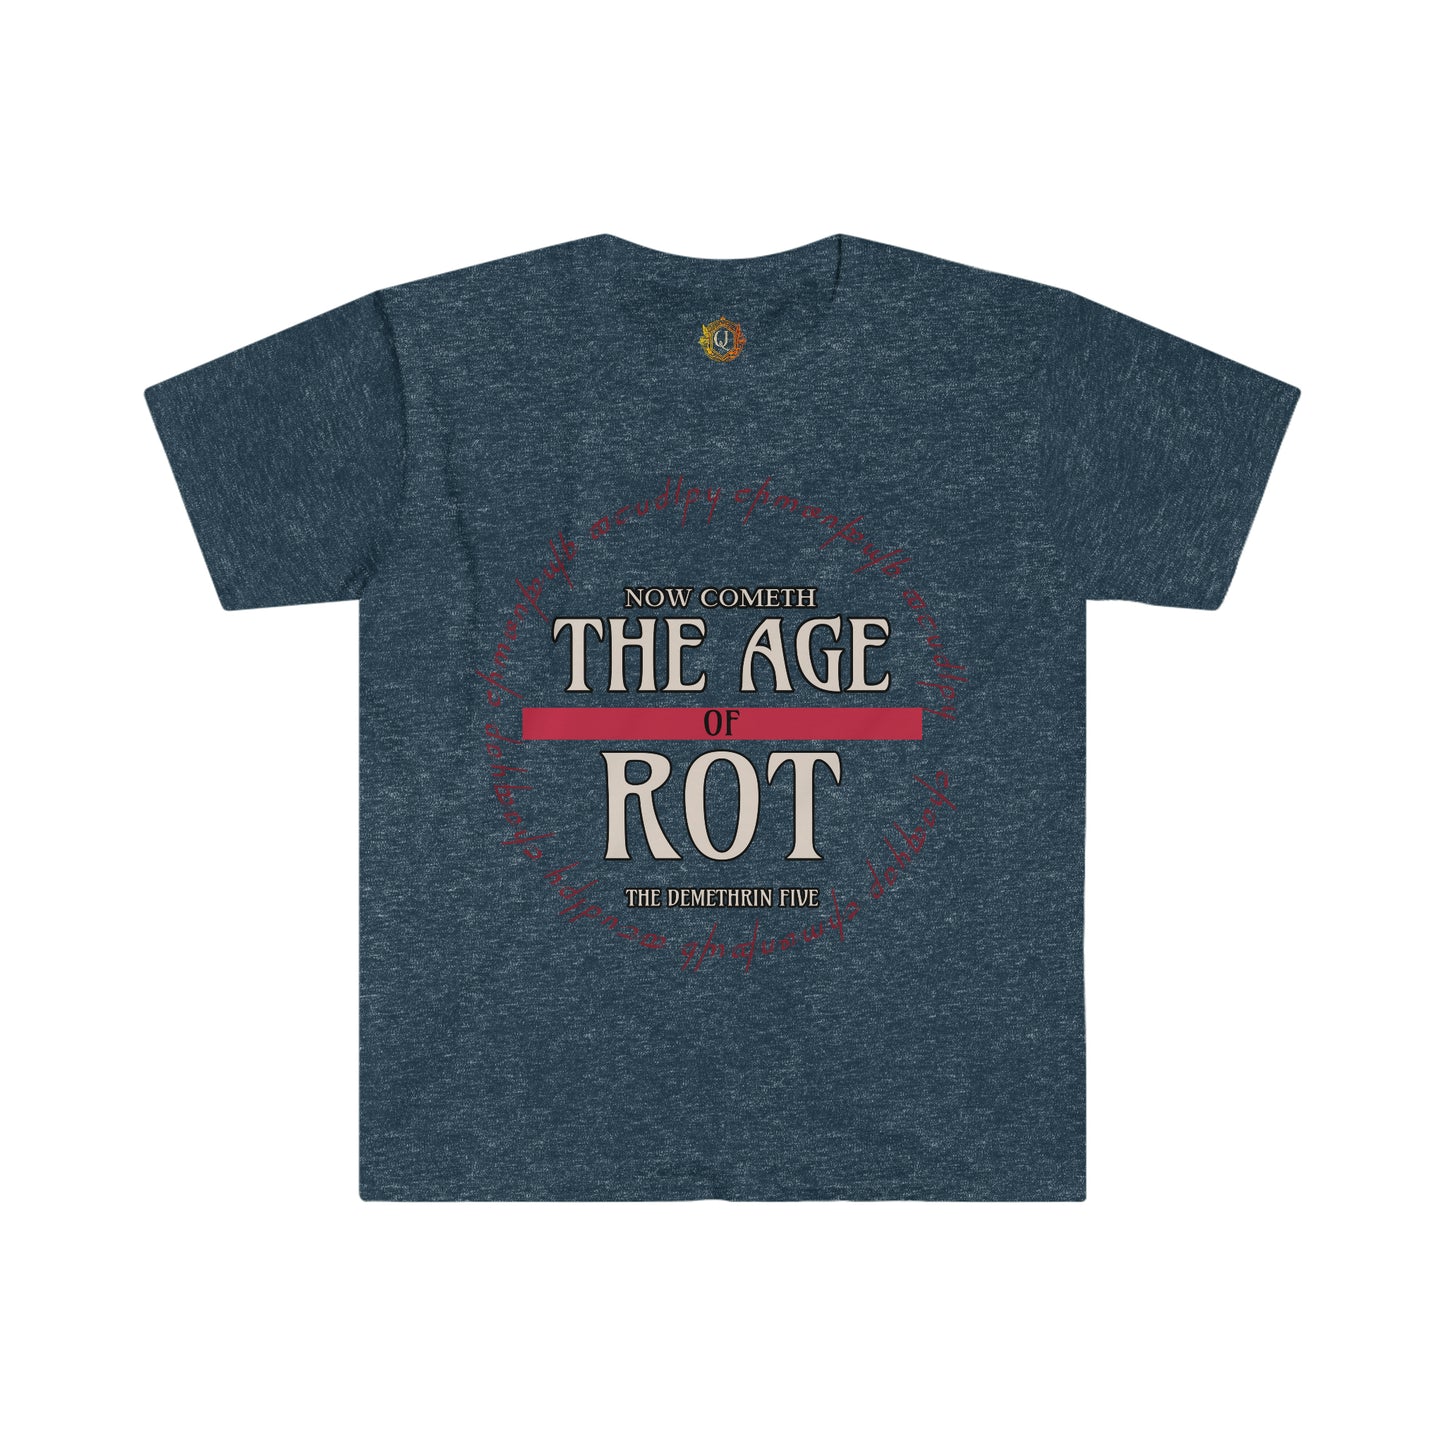 Demethrin "Age Of Rot" T-Shirt